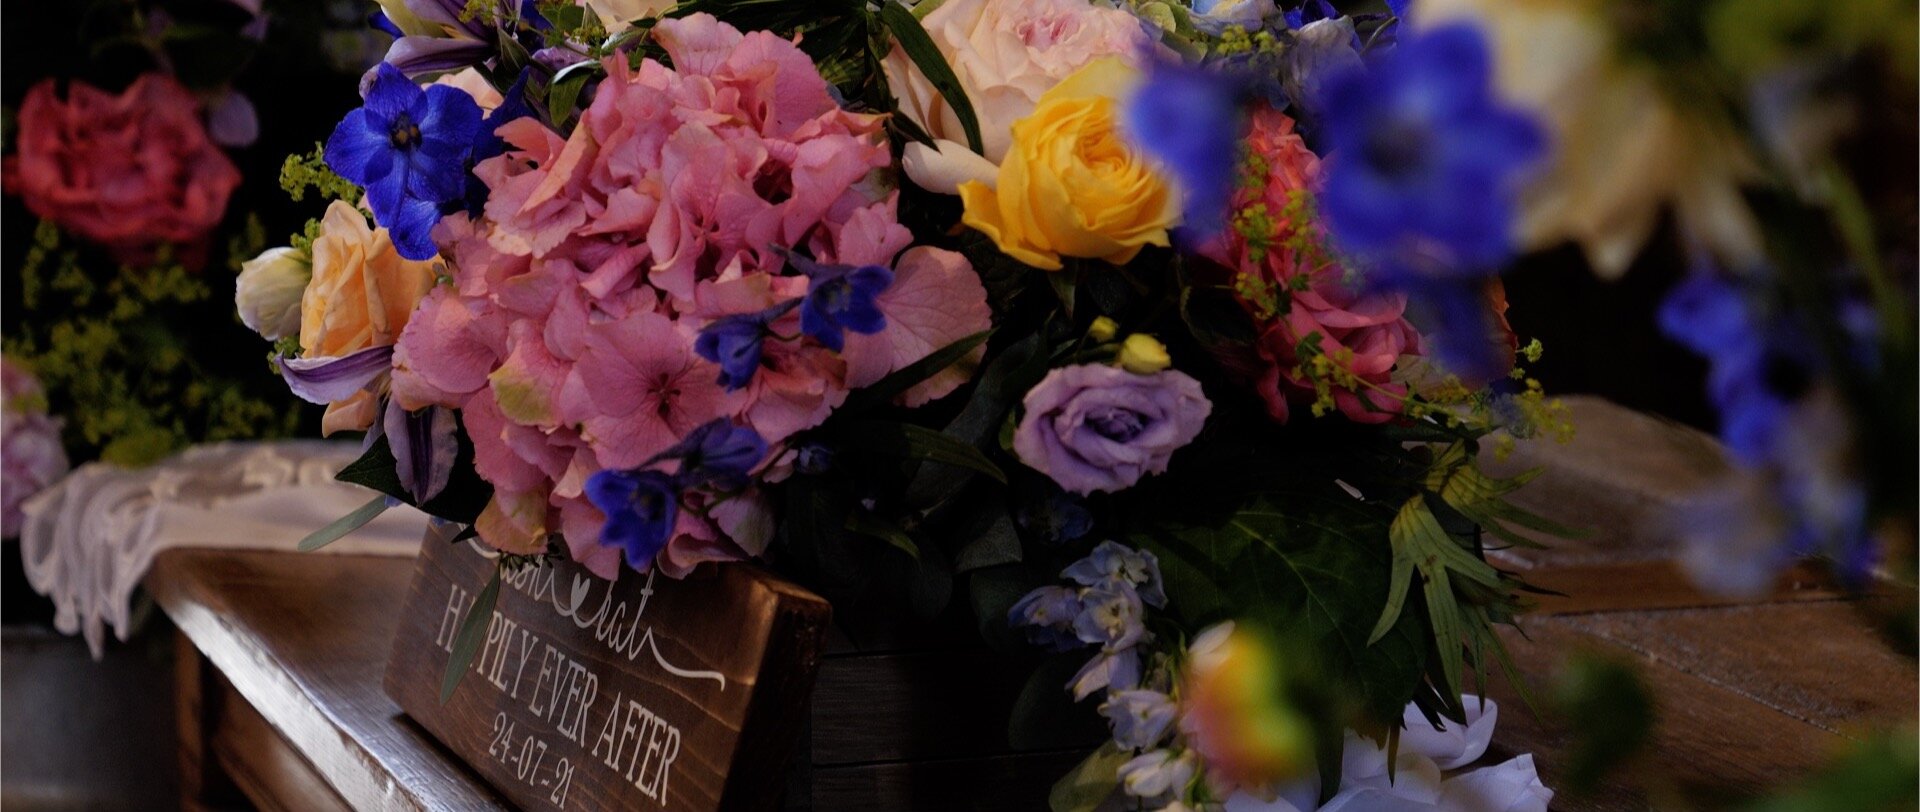 Wedding flowers video at Apton Hall.jpg